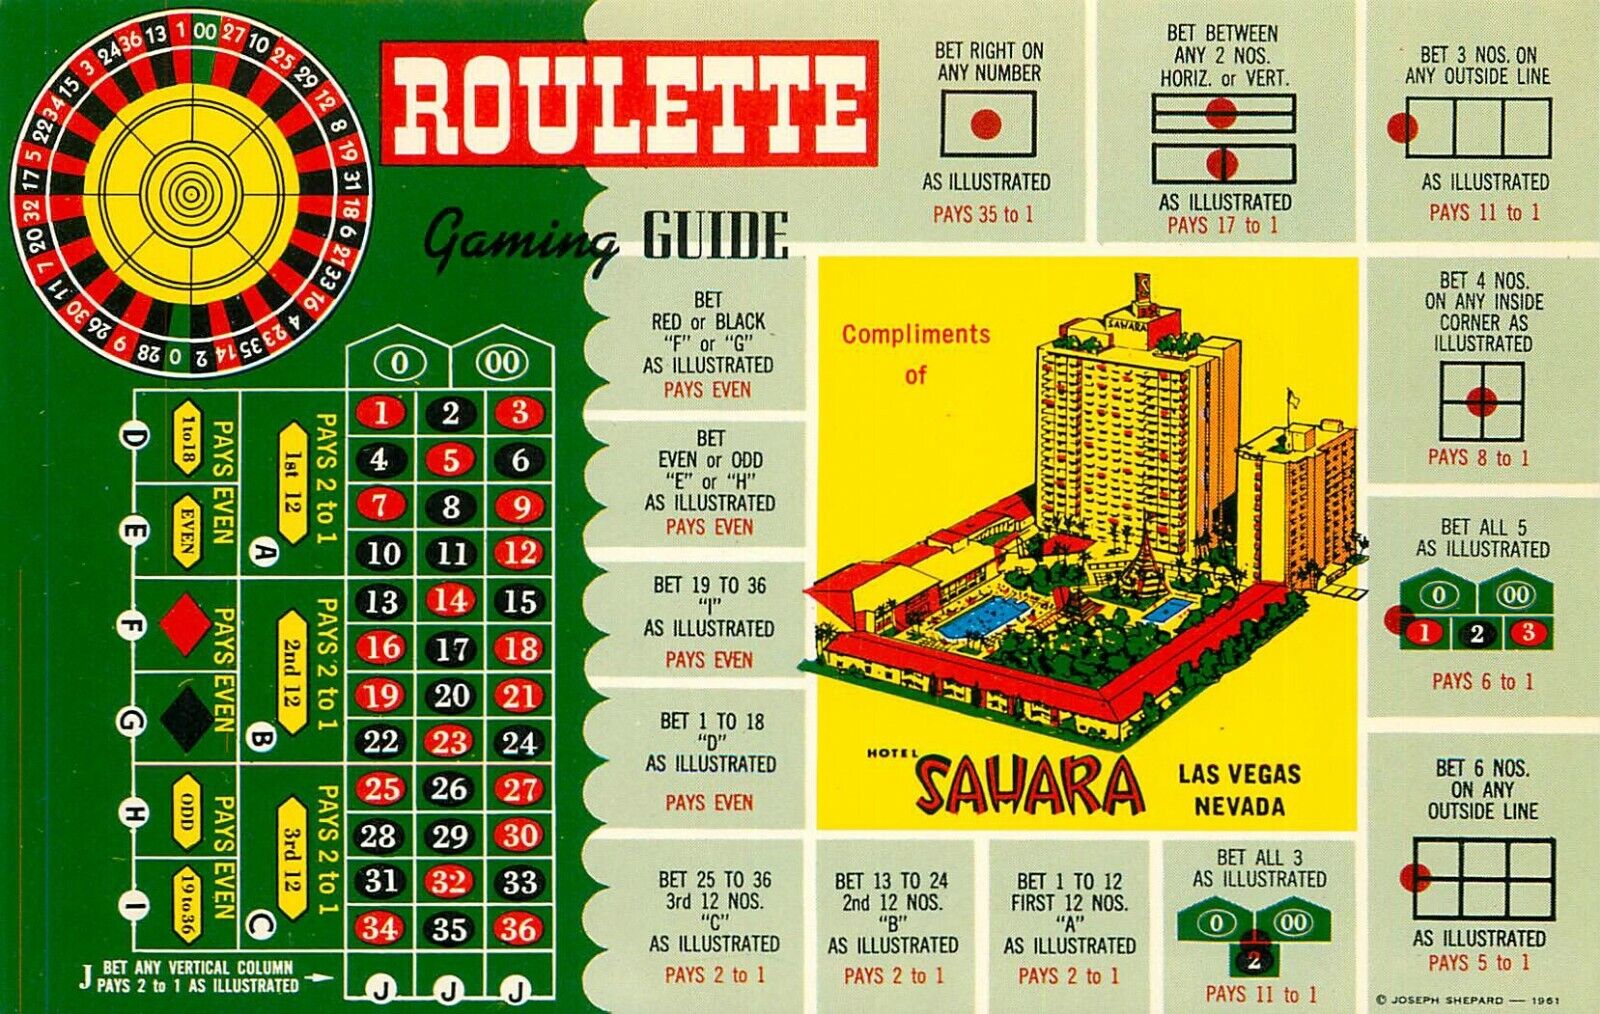 c1950s Roulette Gaming Guide, Sahara Hotel, Las Vegas, Nevada Postcard (A)